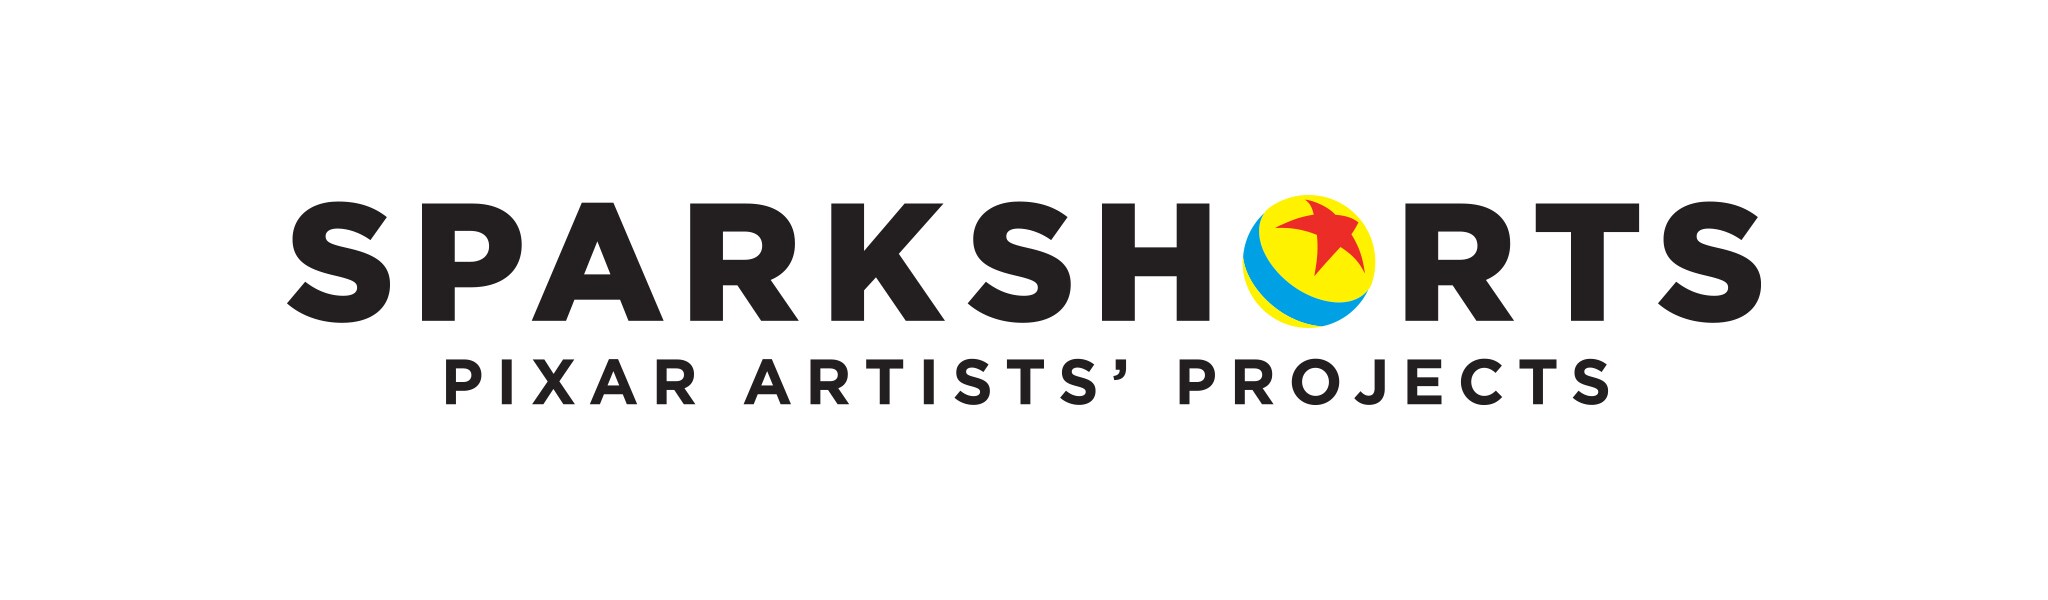 SparkShorts | Pixar Artists' Projects